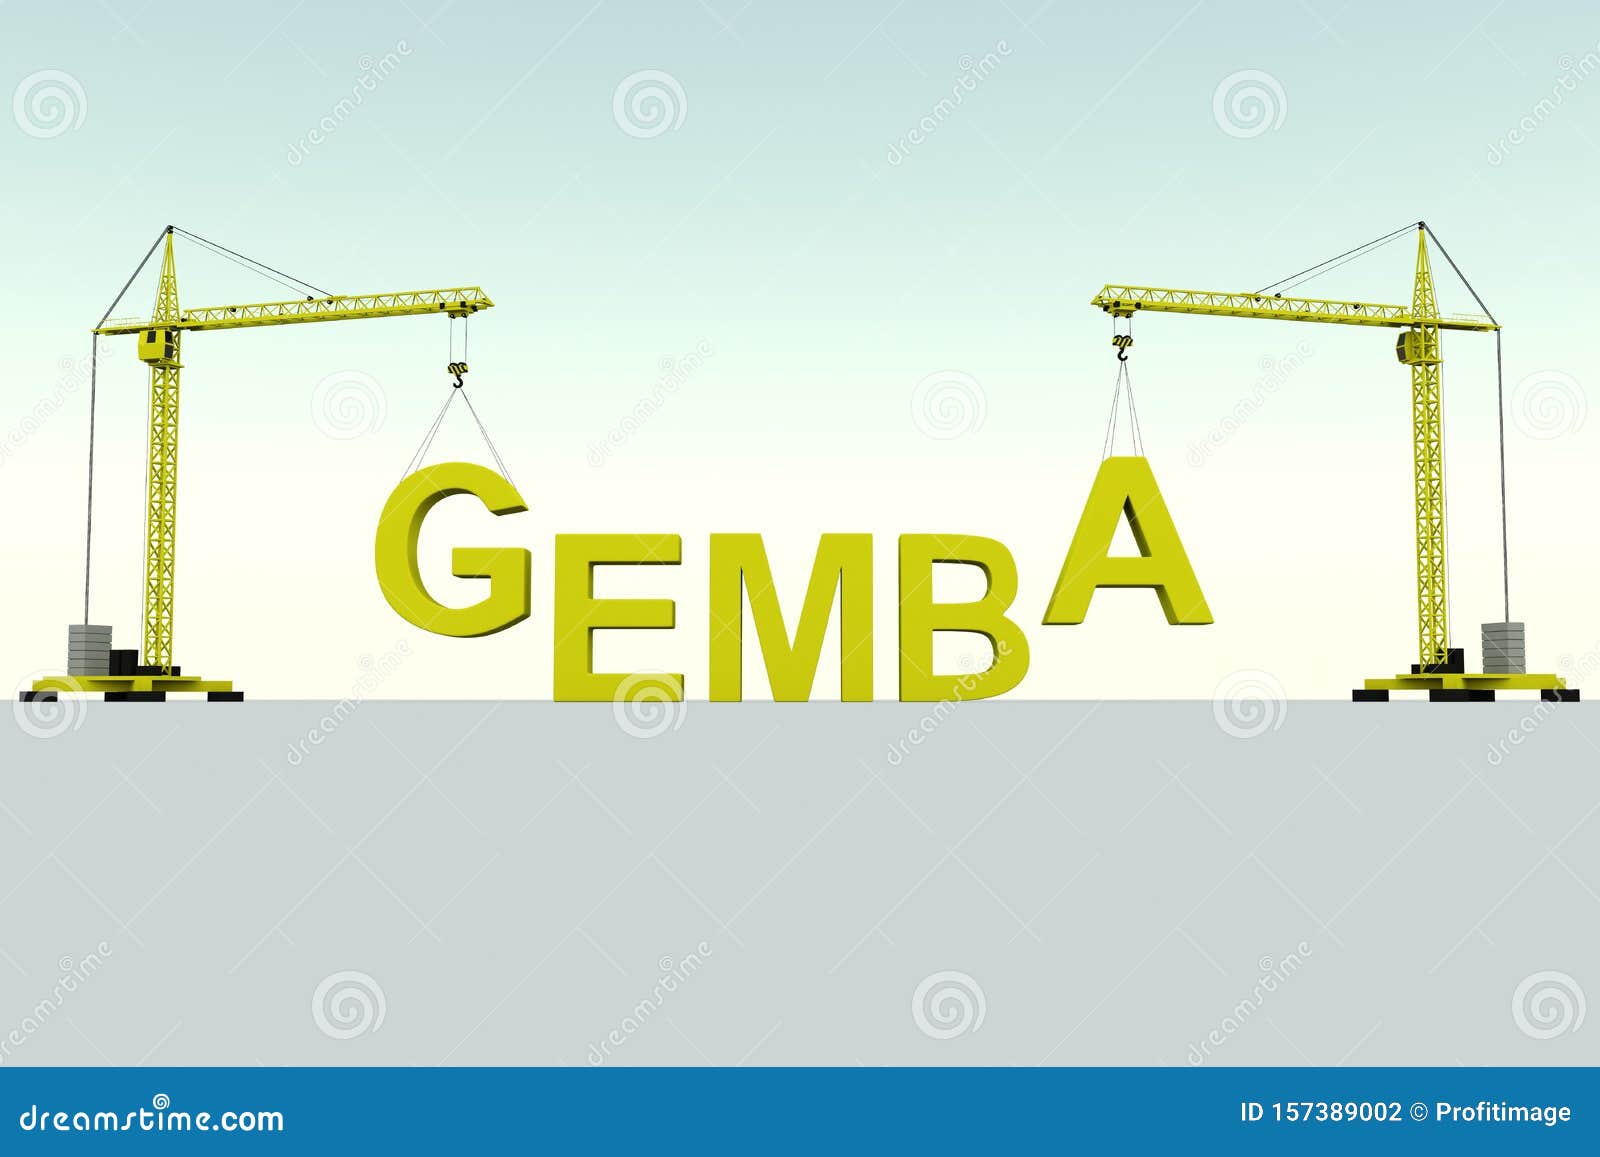 gemba building concept crane white background